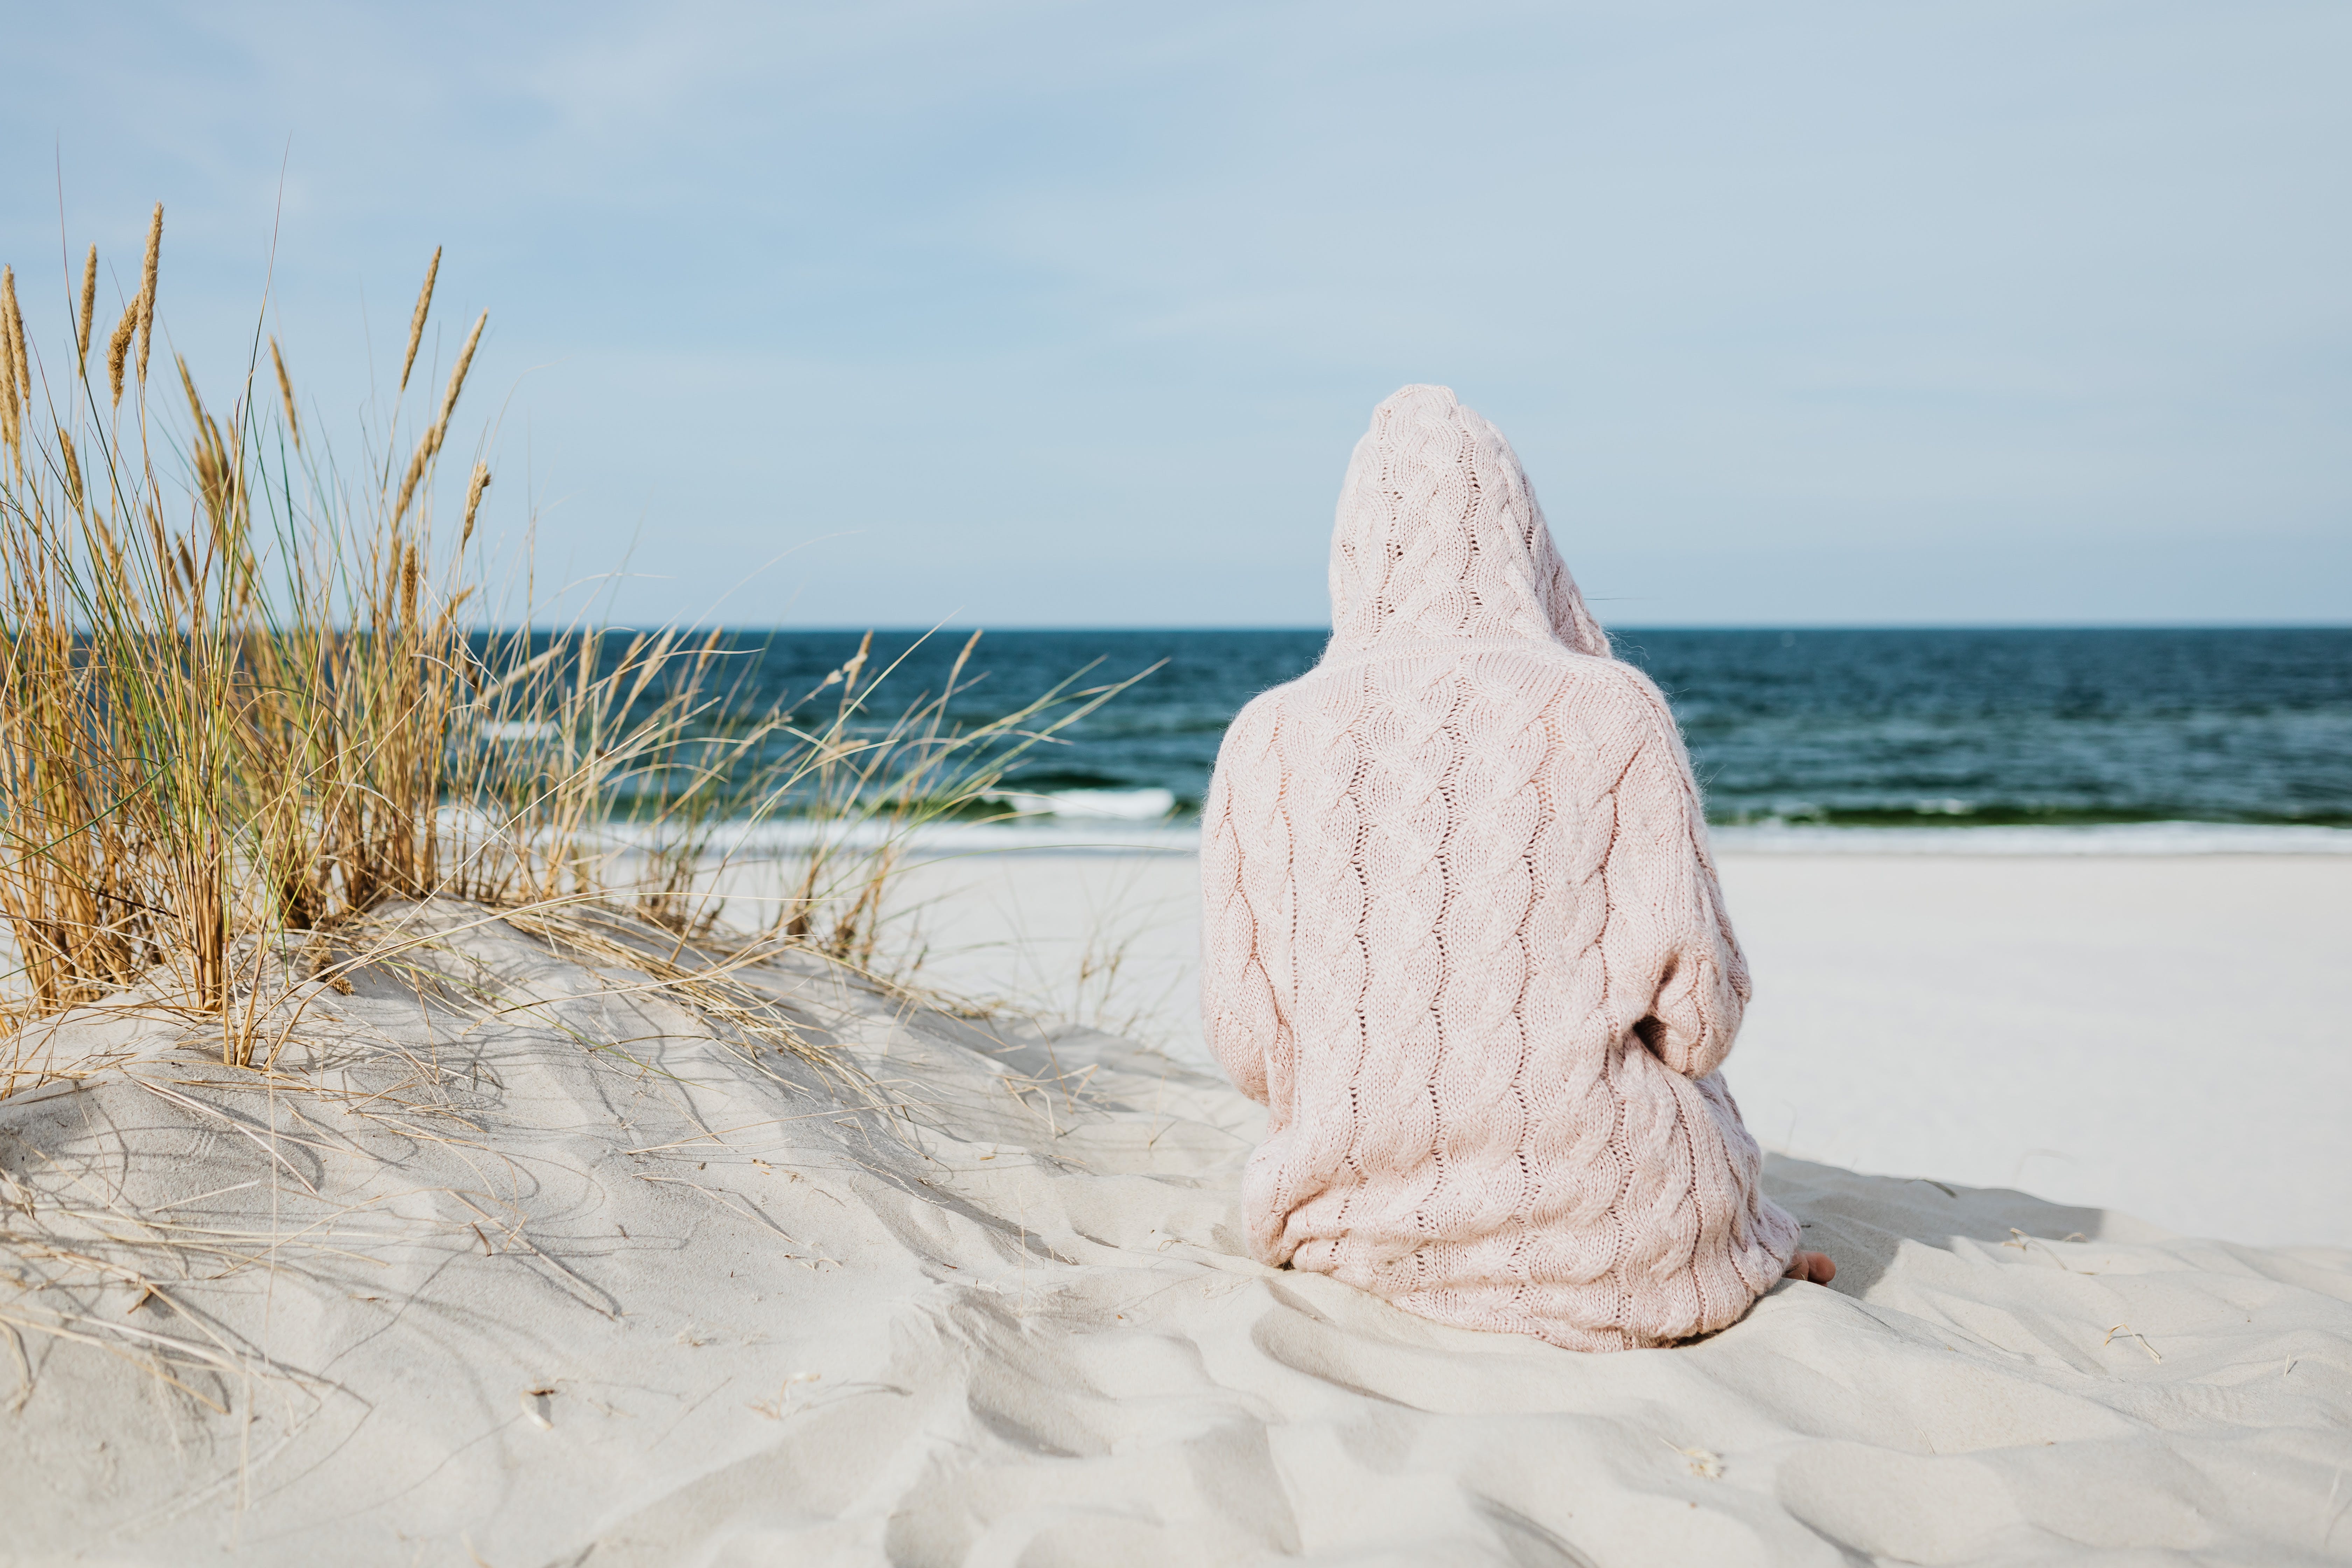 A person sitting on a sand beach